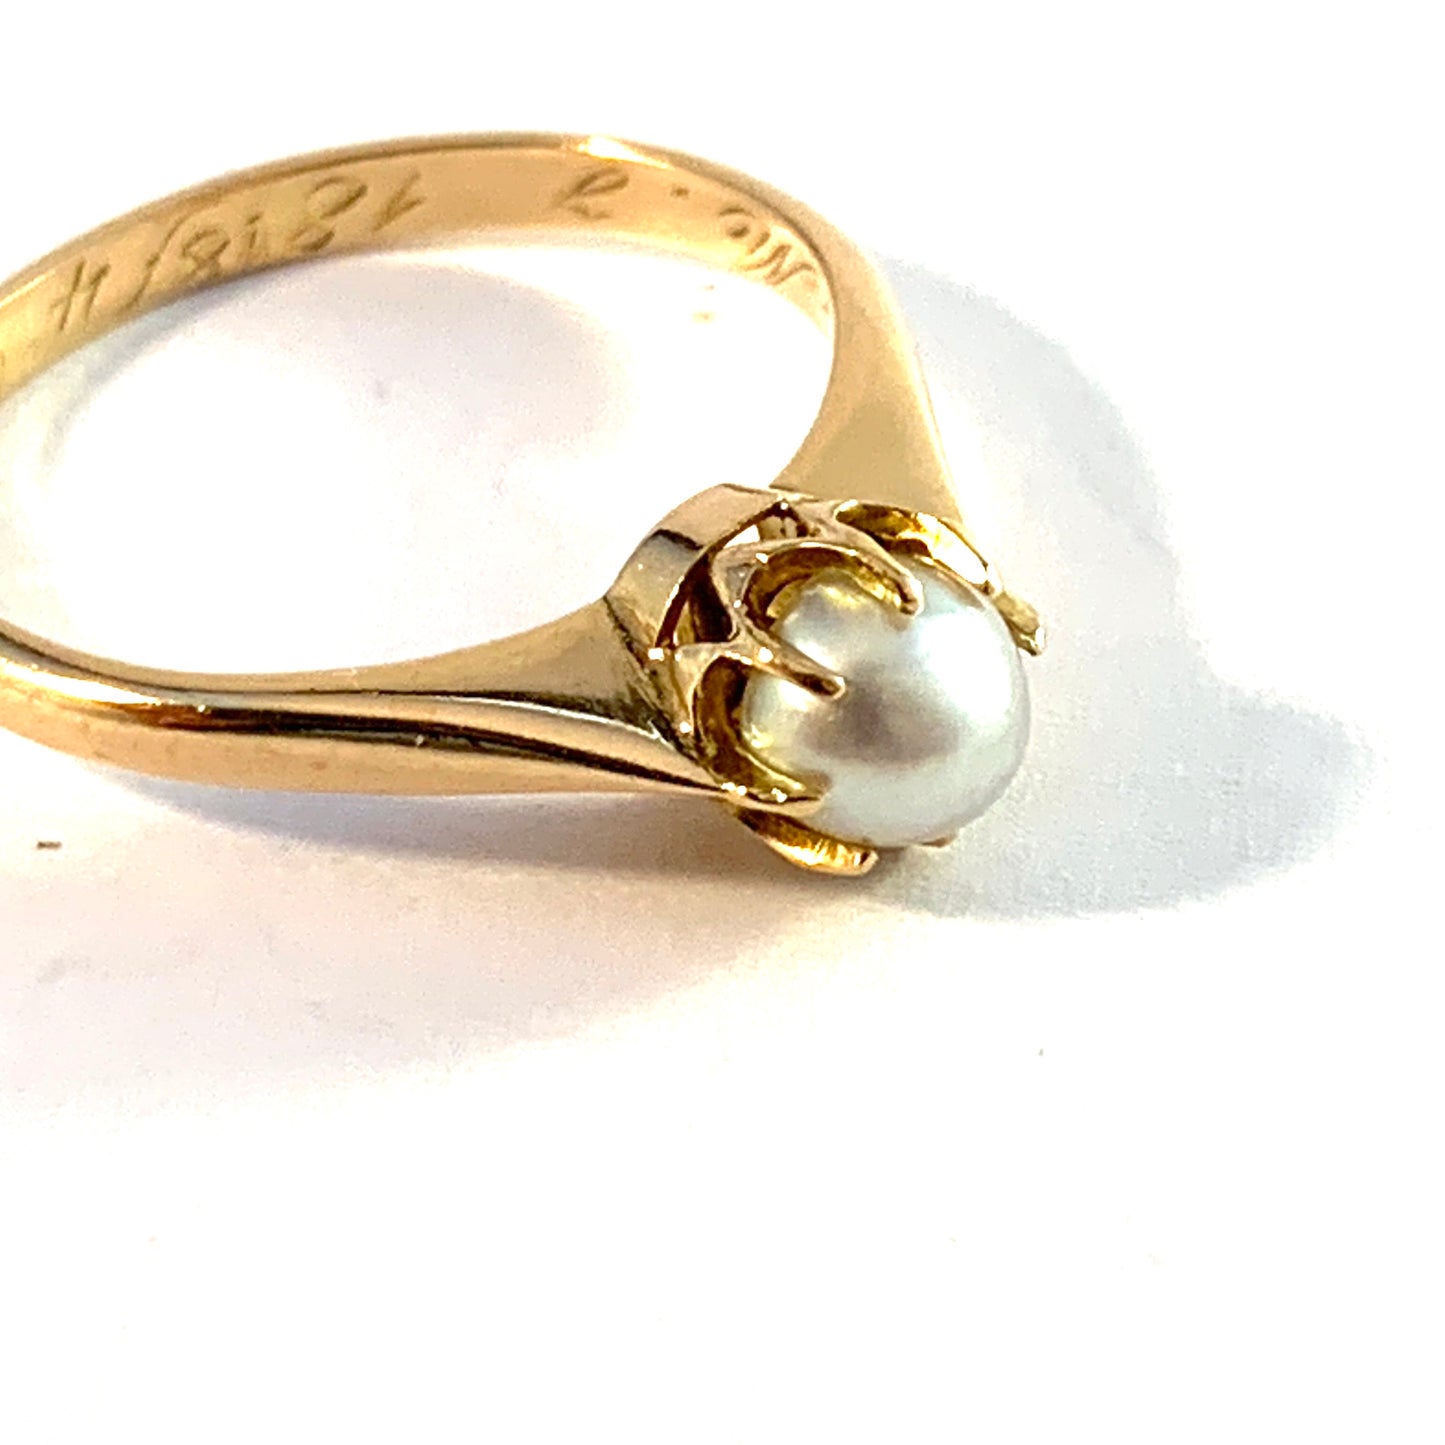 J Petterson, Sweden year 1941. Vintage War-Time 18k Gold Cultured Pearl Ring.